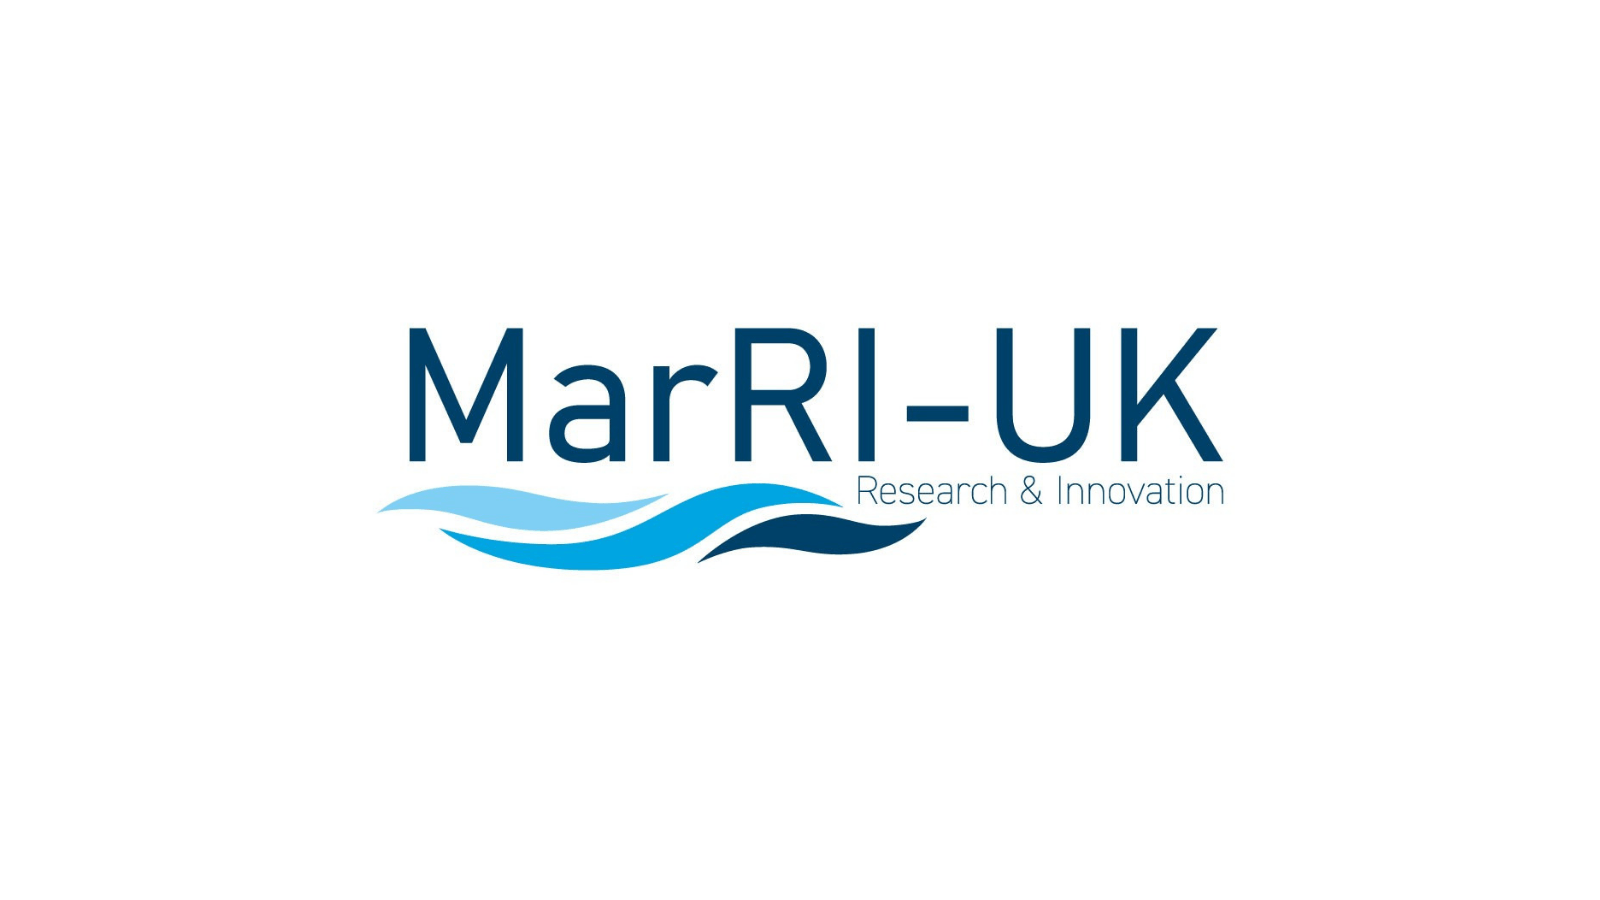 Maritime Logo - Promoting the maritime sector | Maritime UK